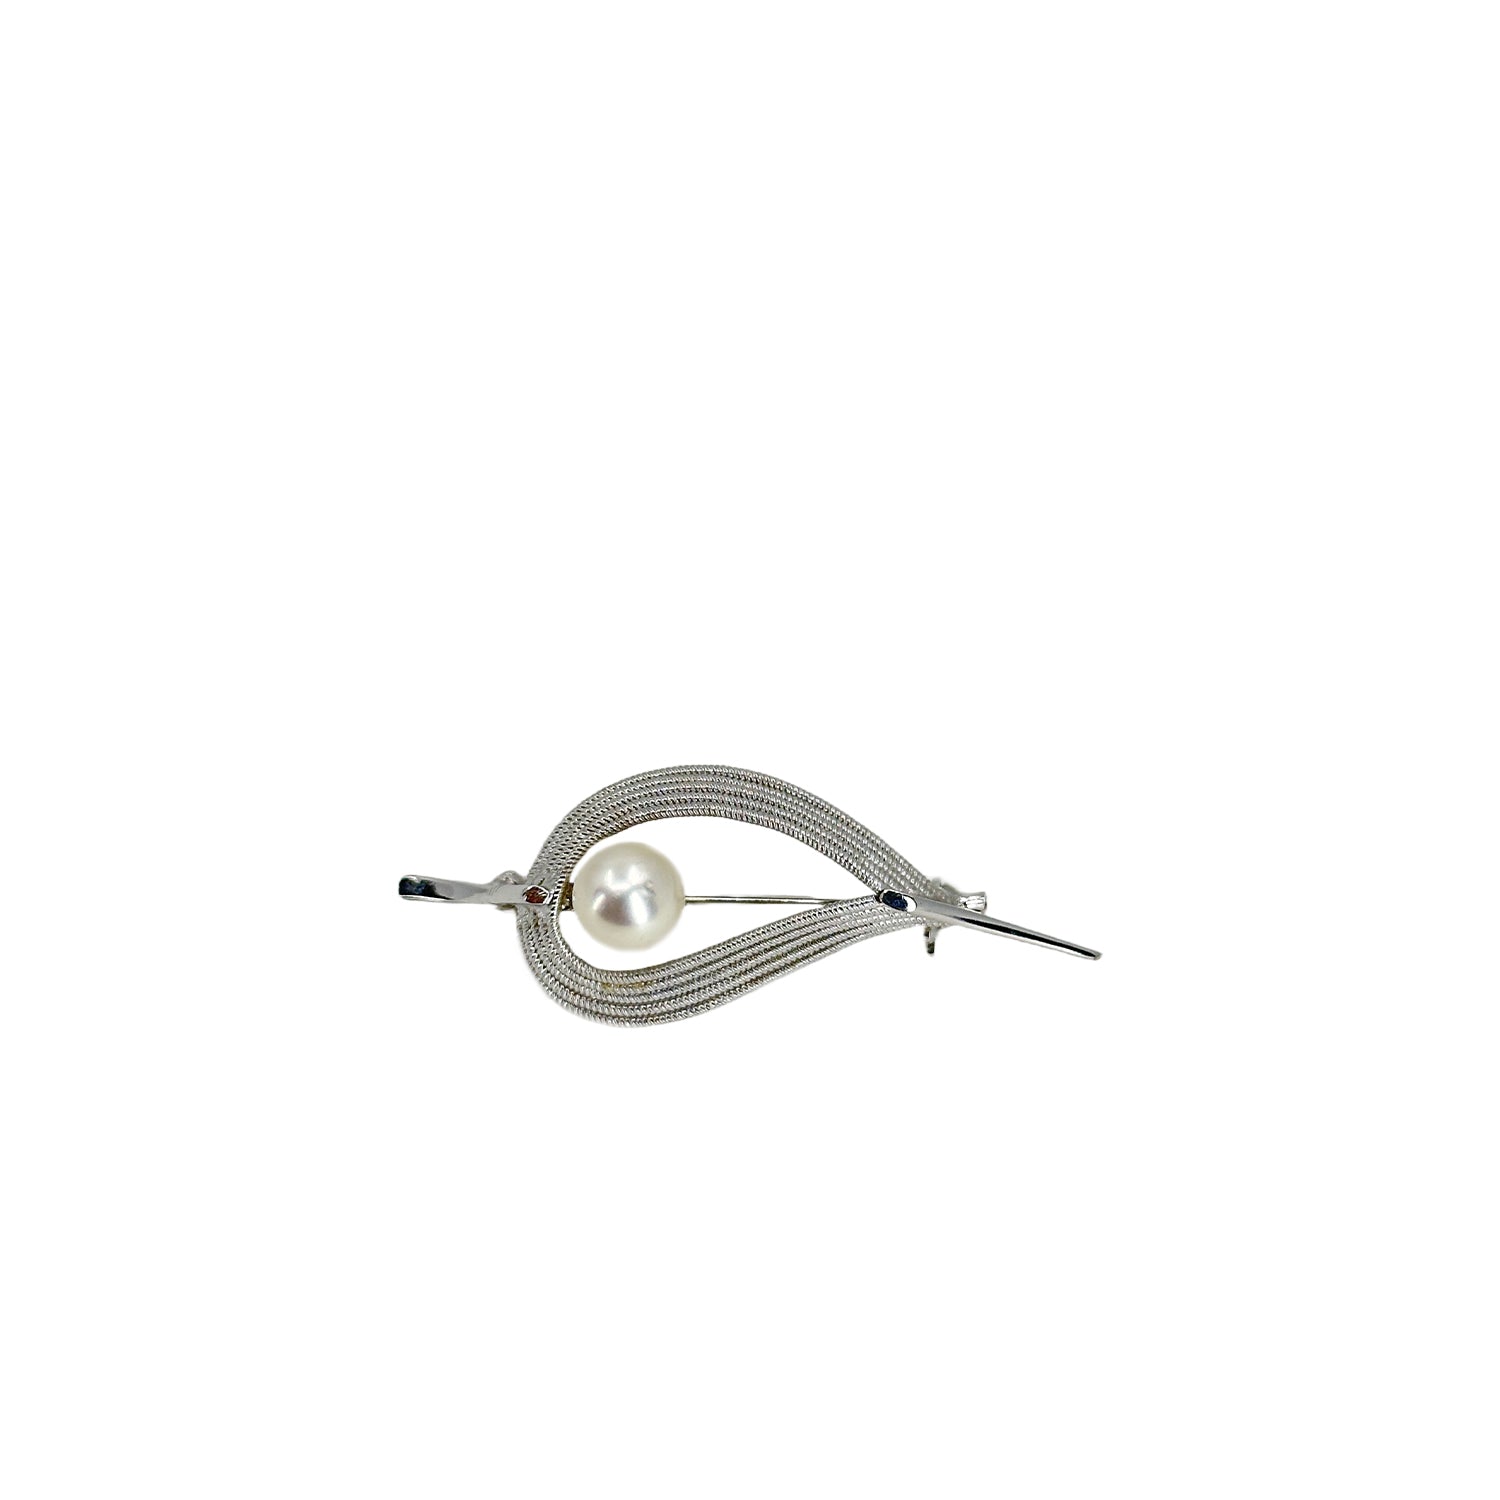 Modernist Single Japanese Saltwater Akoya Cultured Pearl Vintage Pin Brooch Pendant- Sterling Silver